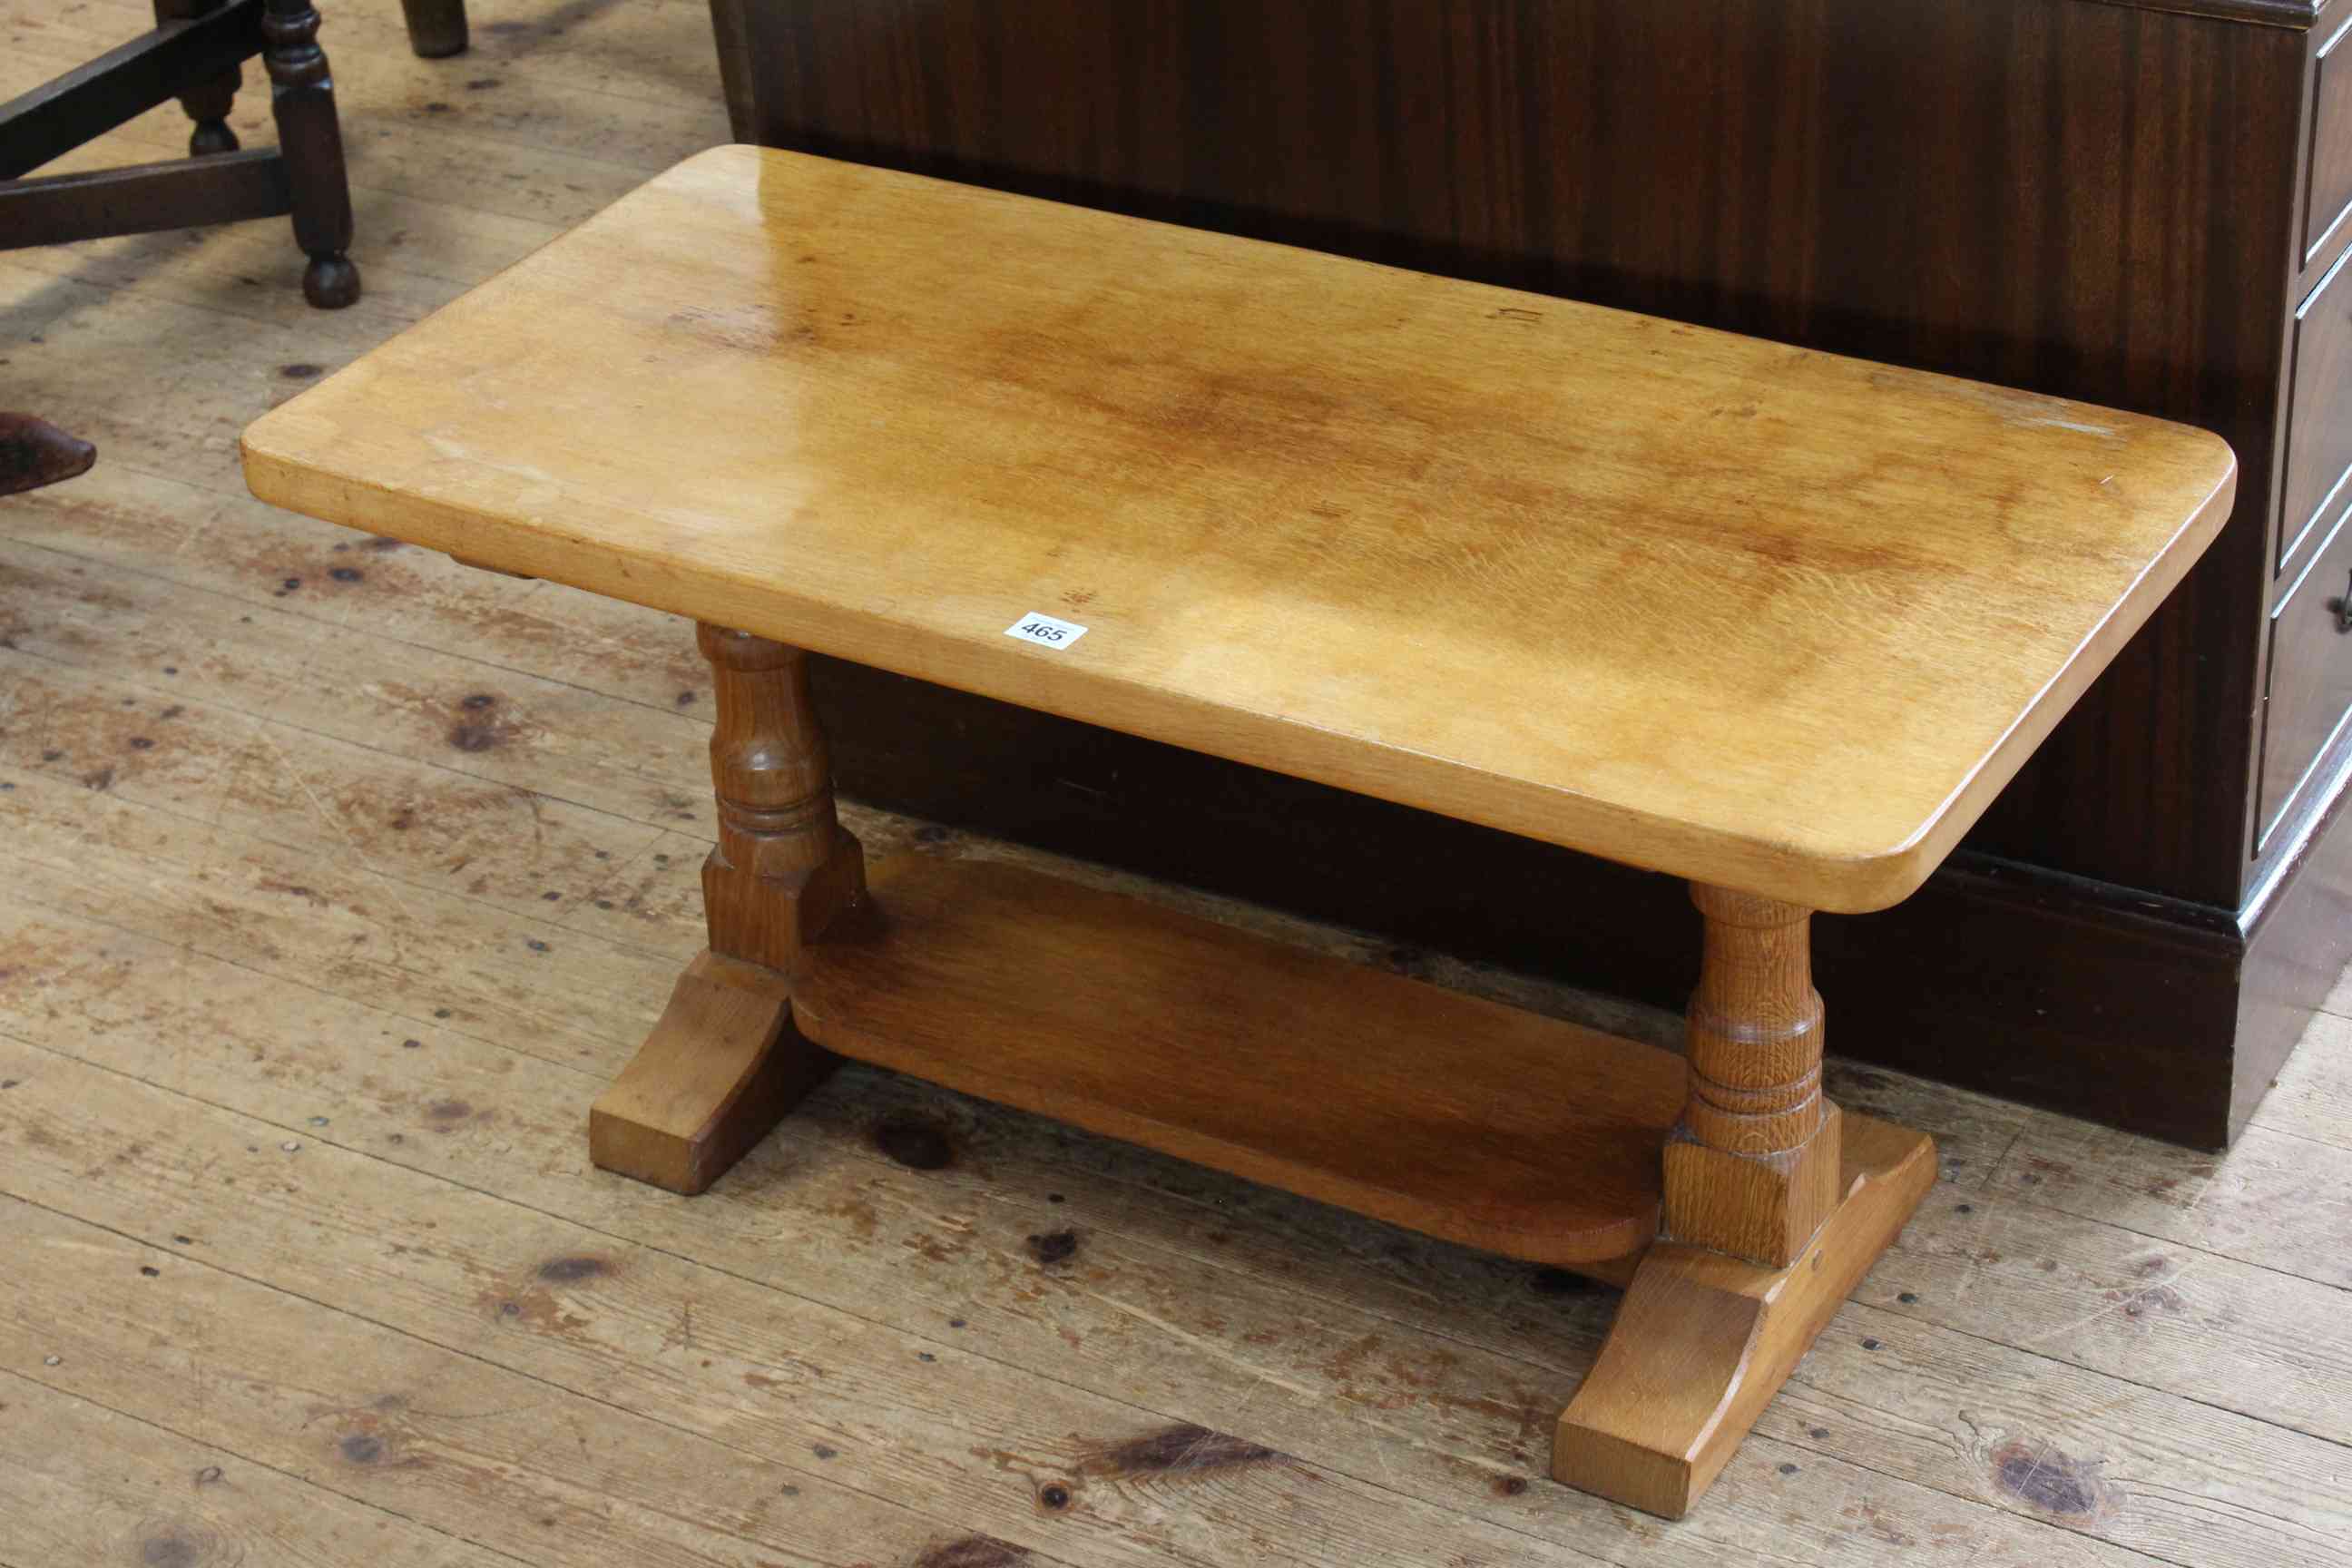 Rectangular oak adzed cut coffee table with cat motif, 43cm by 88cm by 42.5cm.